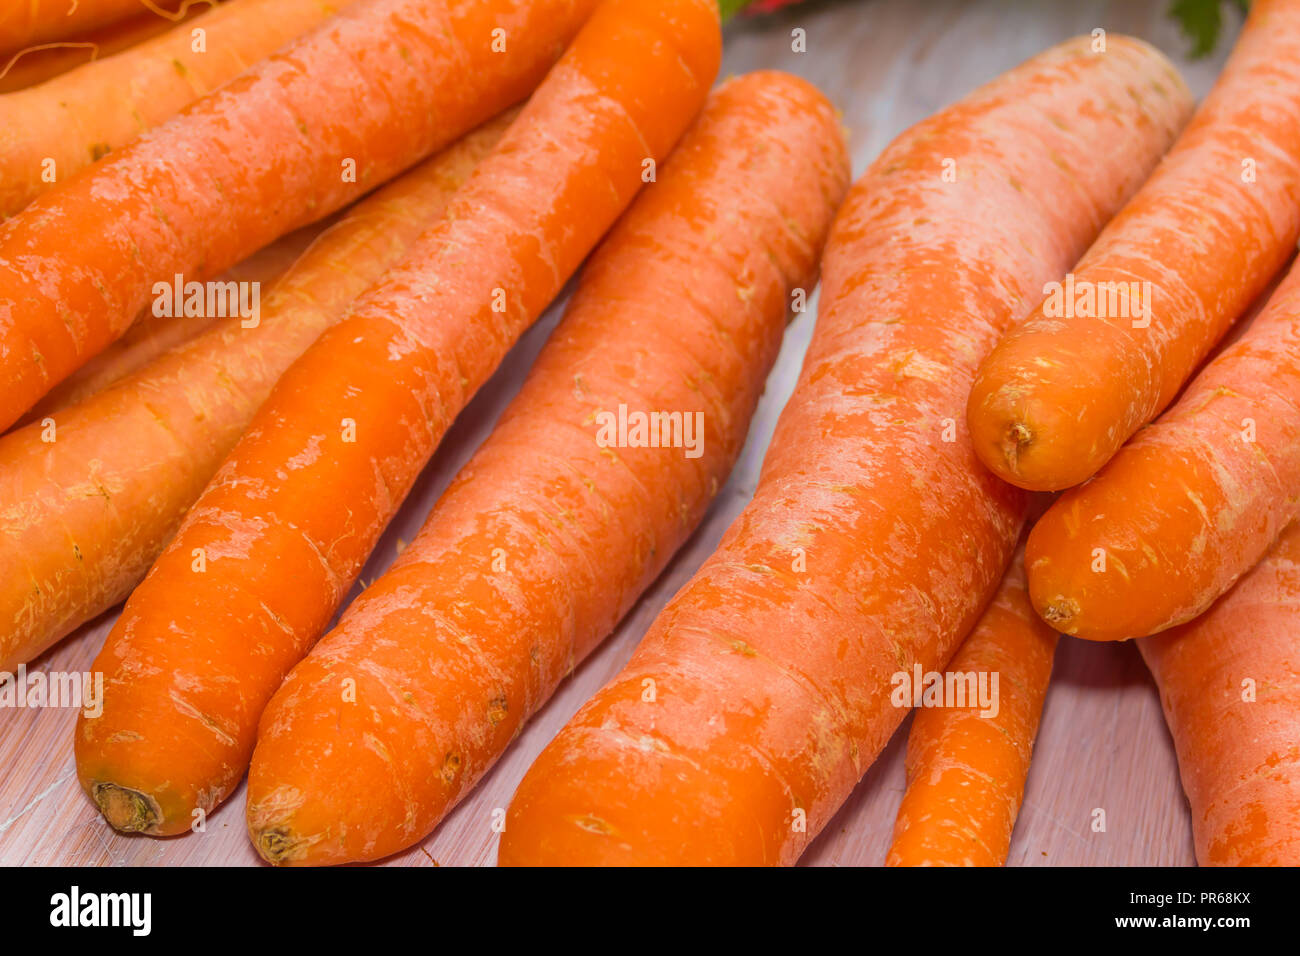 Fresh, raw, organic, bio, orange carrots. Healthy vegan vegetarian vegetable food Stock Photo